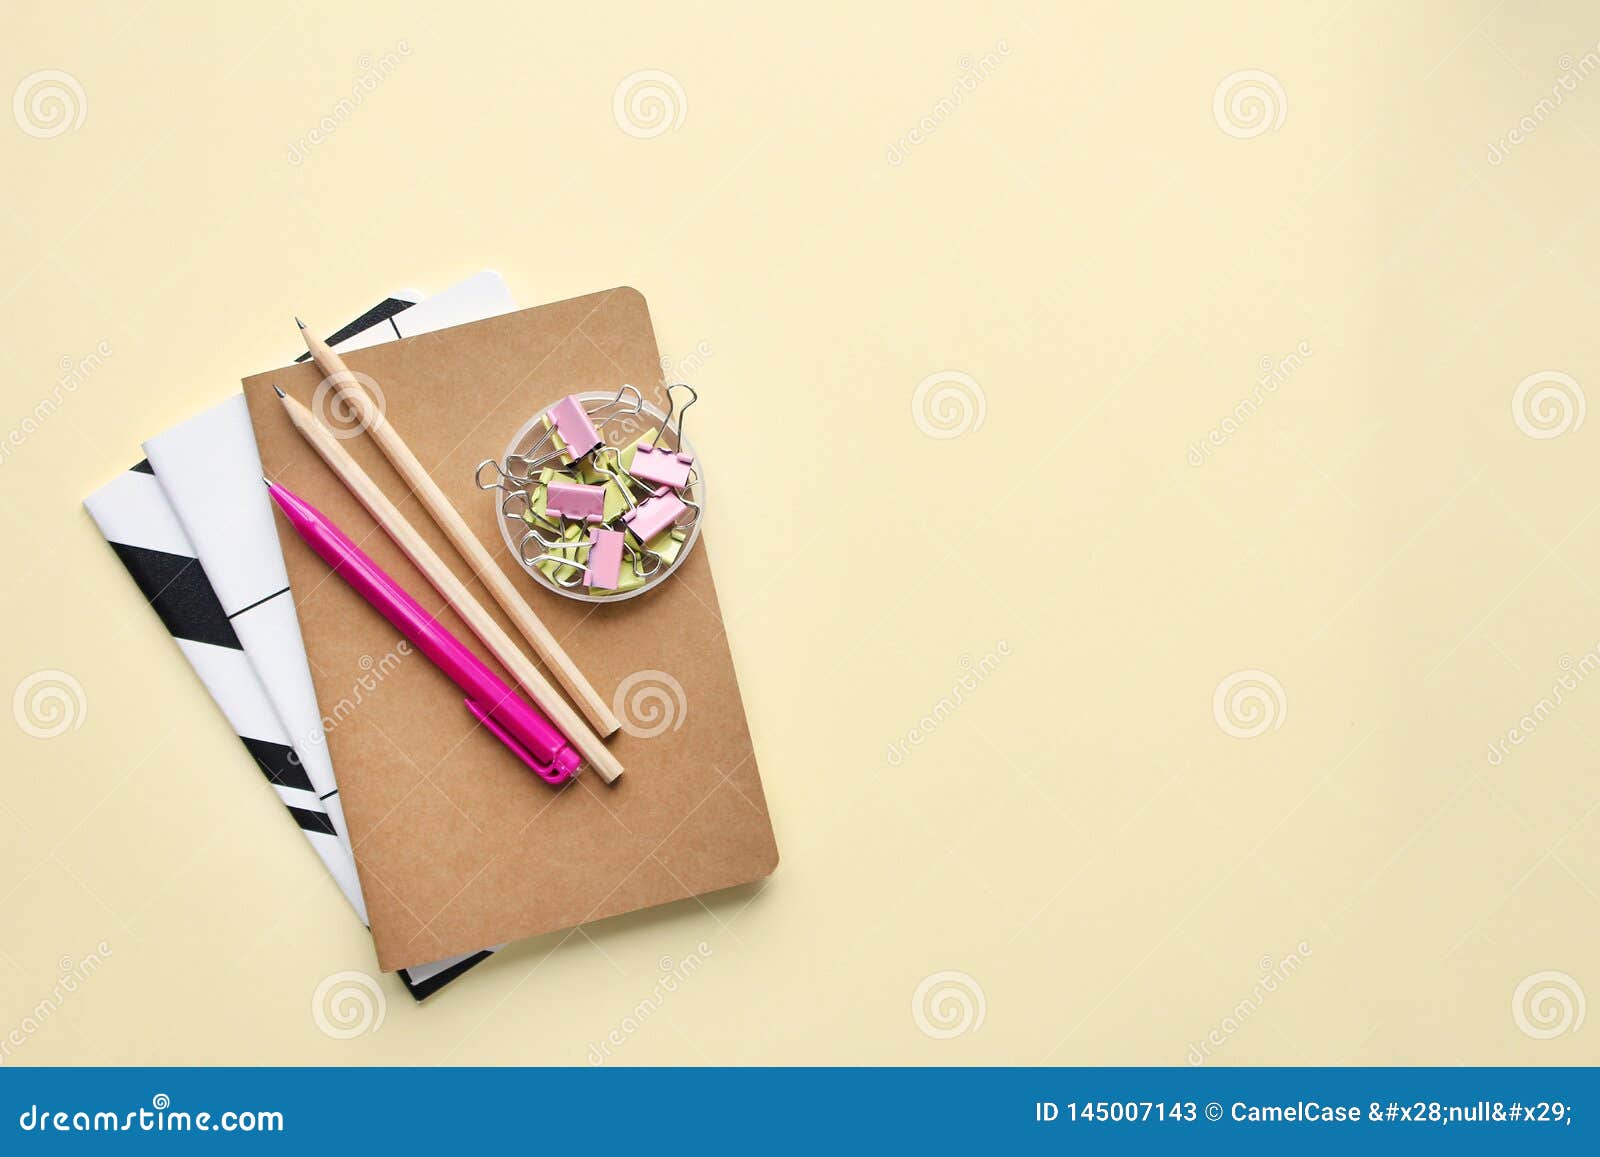 Notebooks Pencils Pen Binders On Biege Background Stock Image